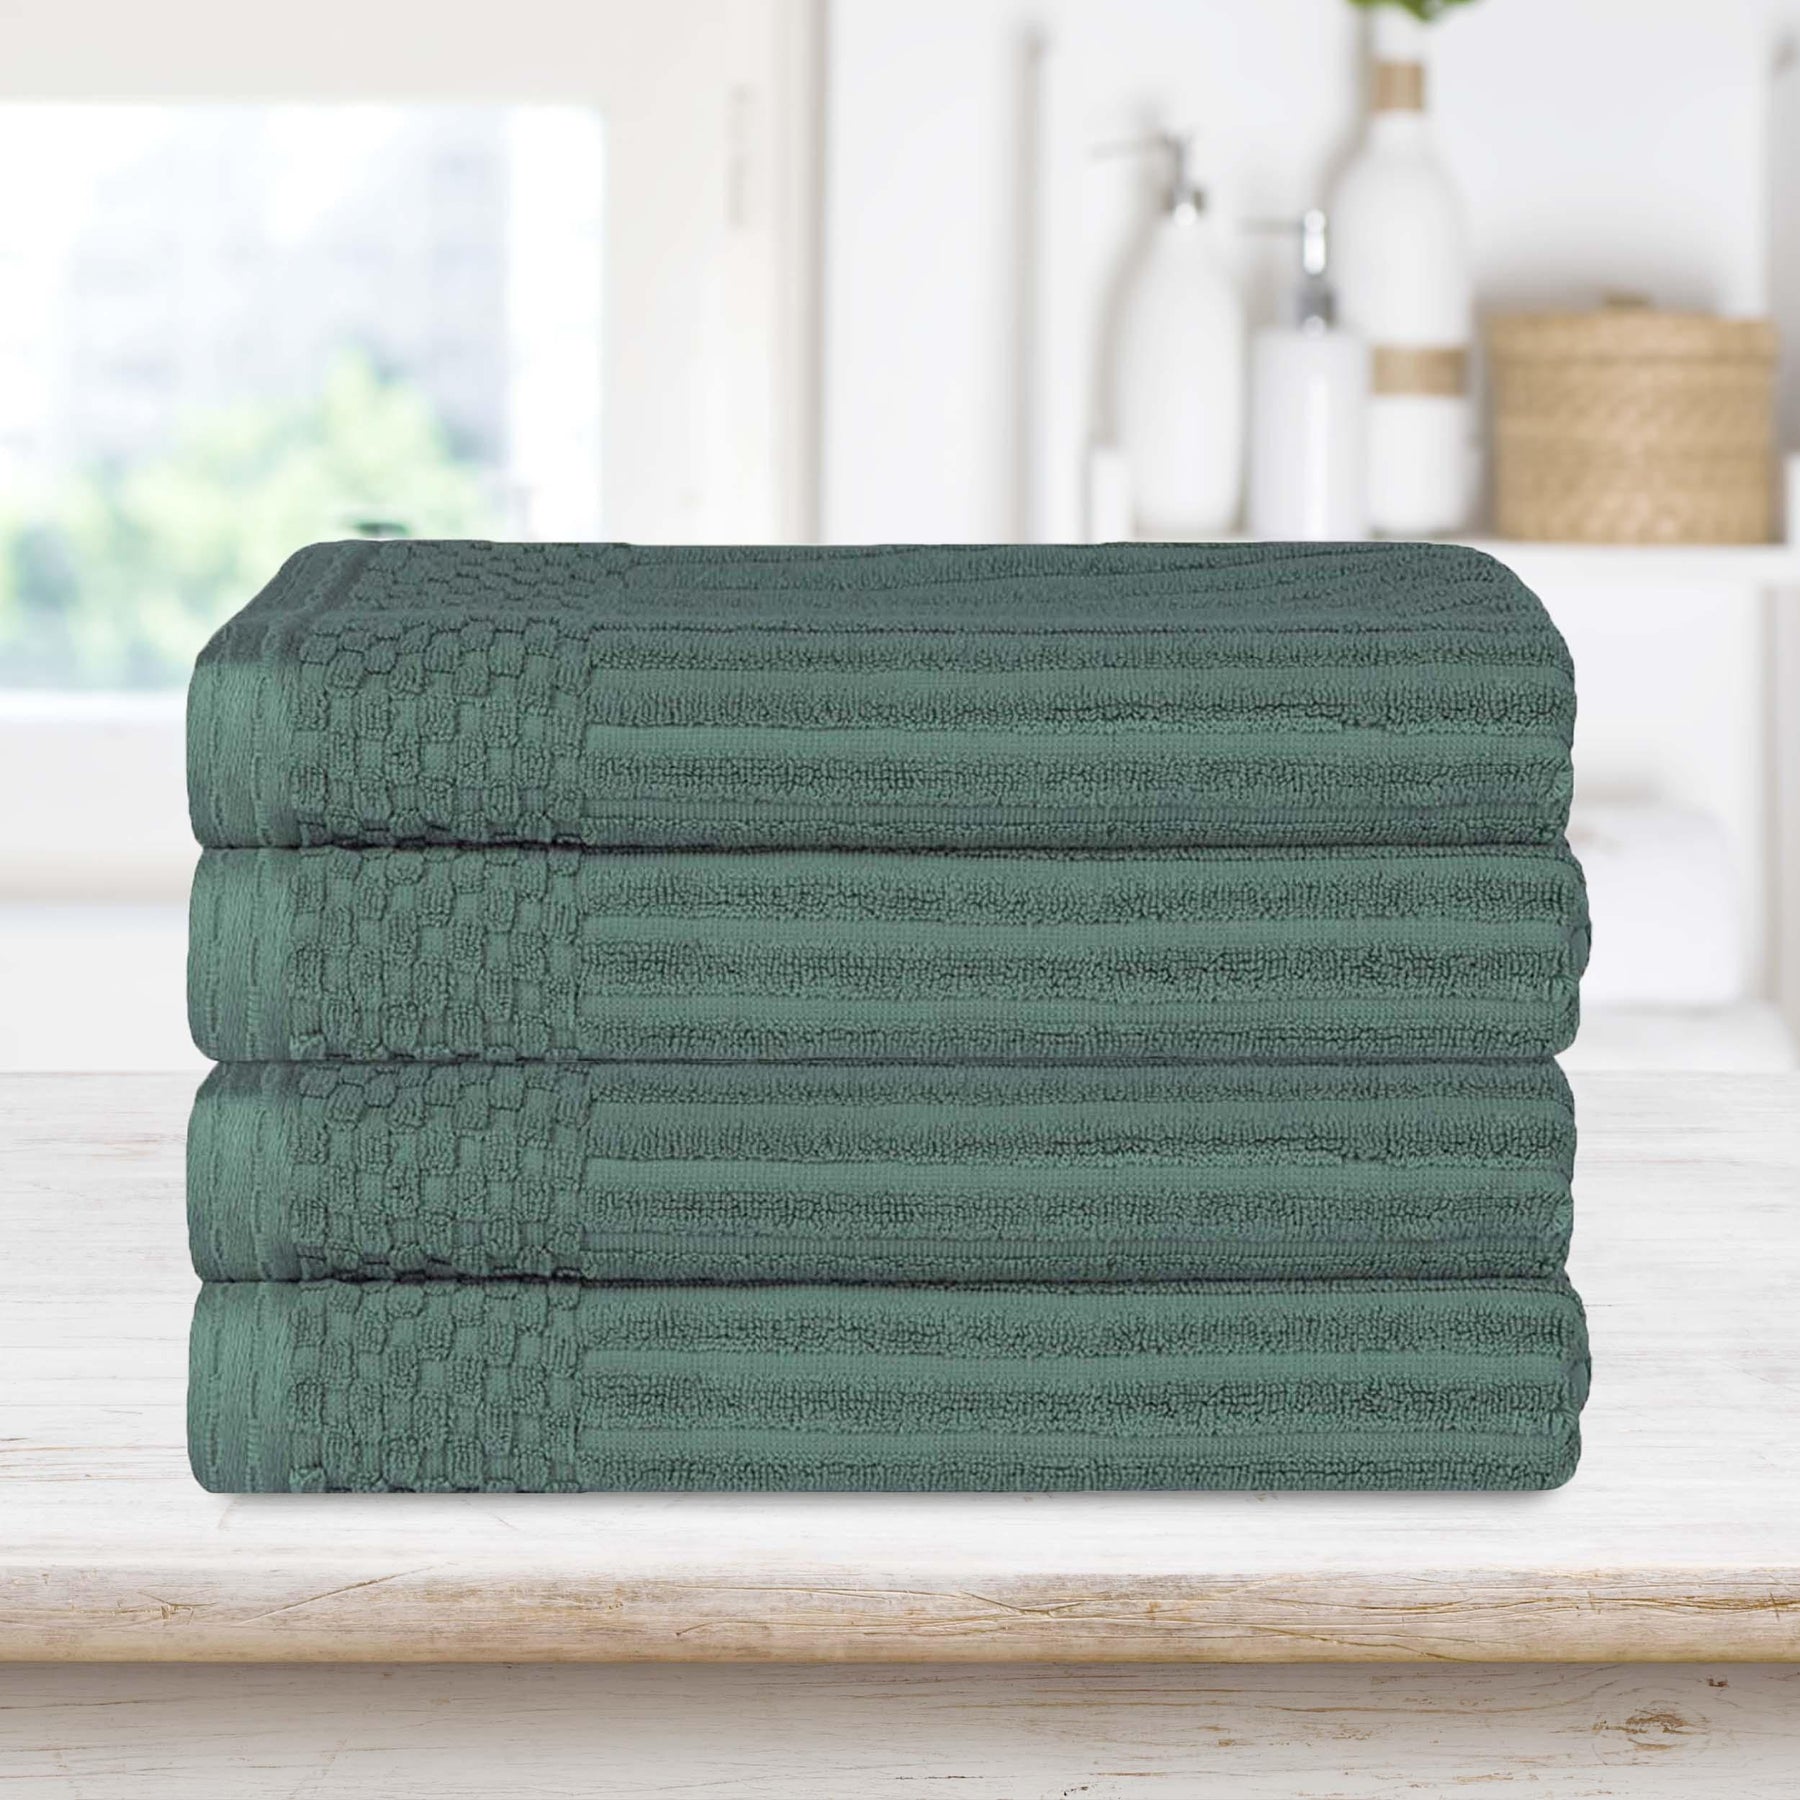  Superior Soho Ribbed Textured Cotton Ultra-Absorbent Bath Sheet & Bath Towel Set - Pine